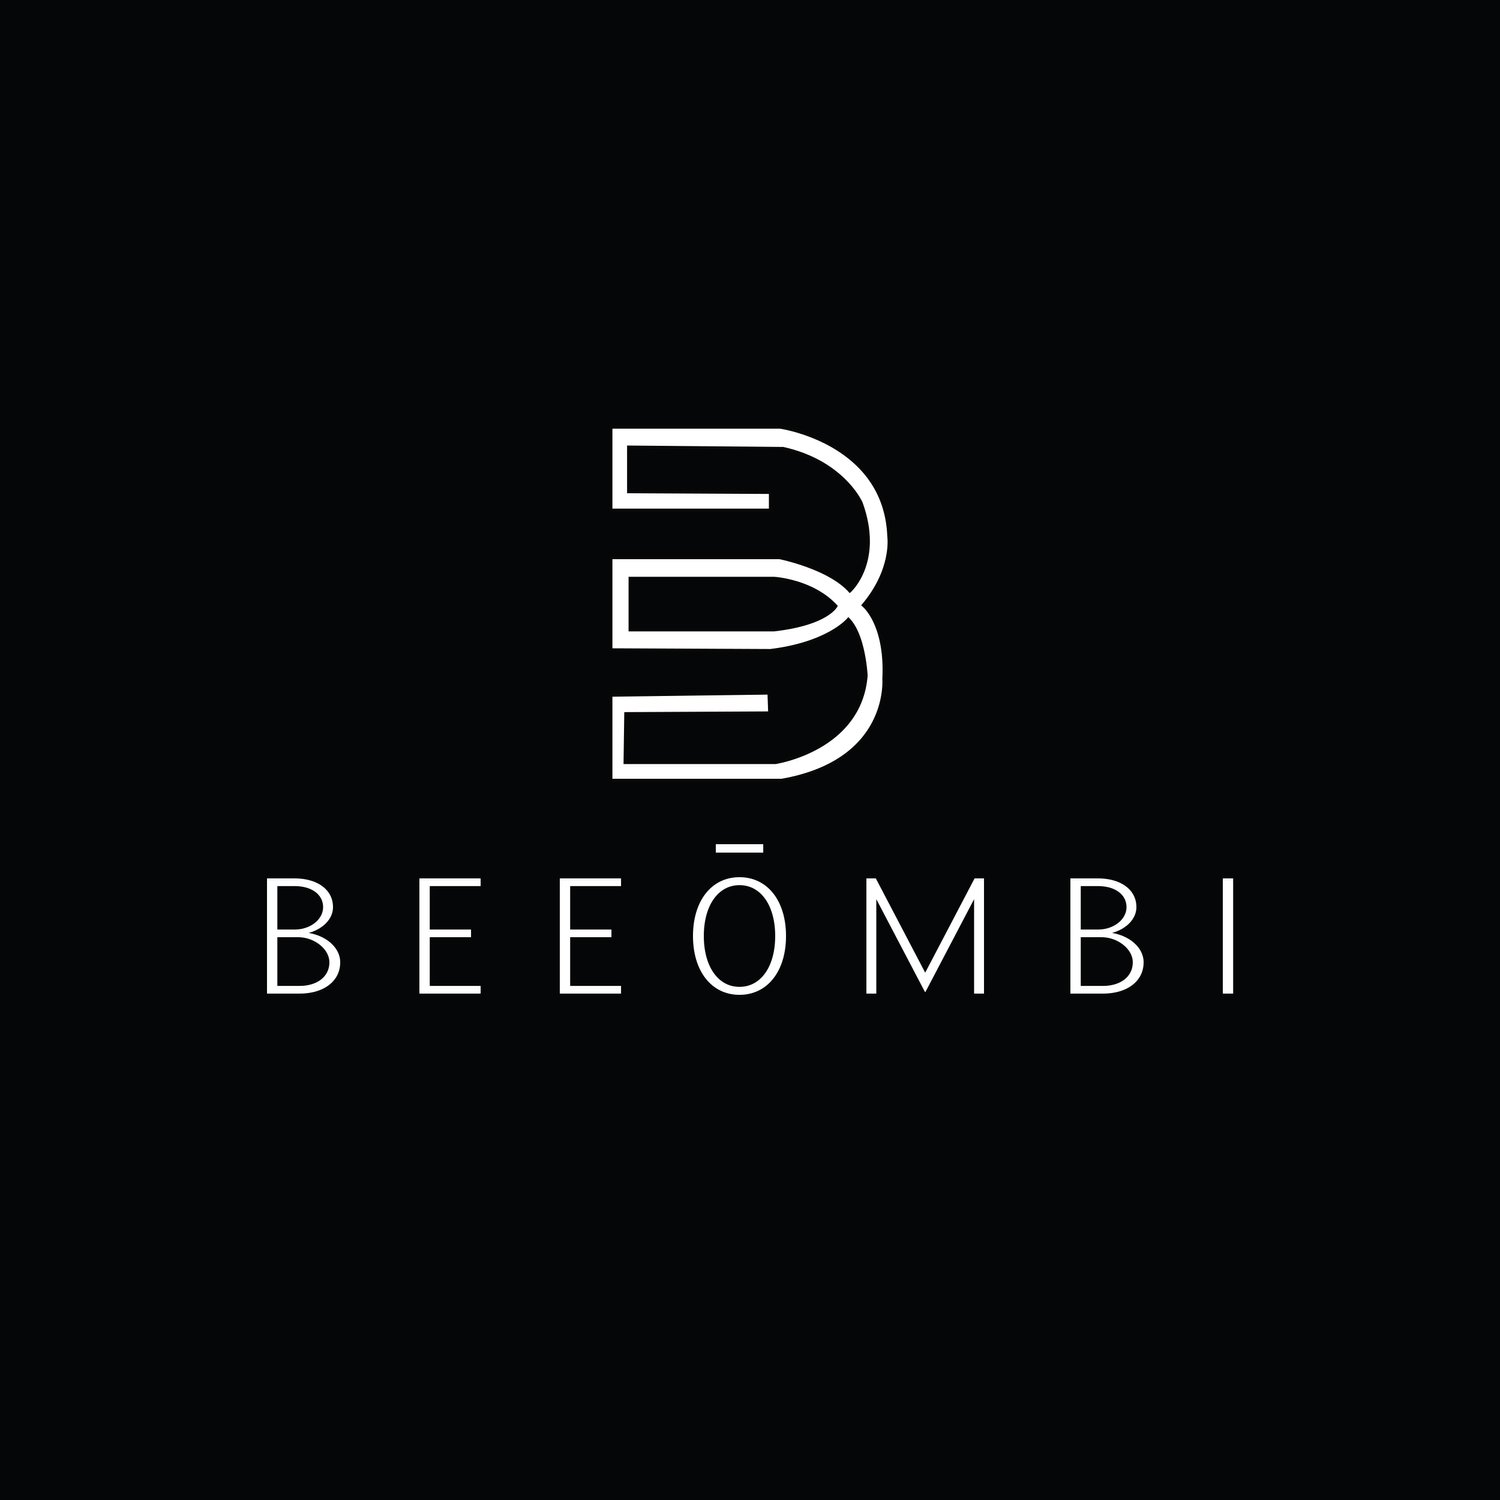 Beeombi